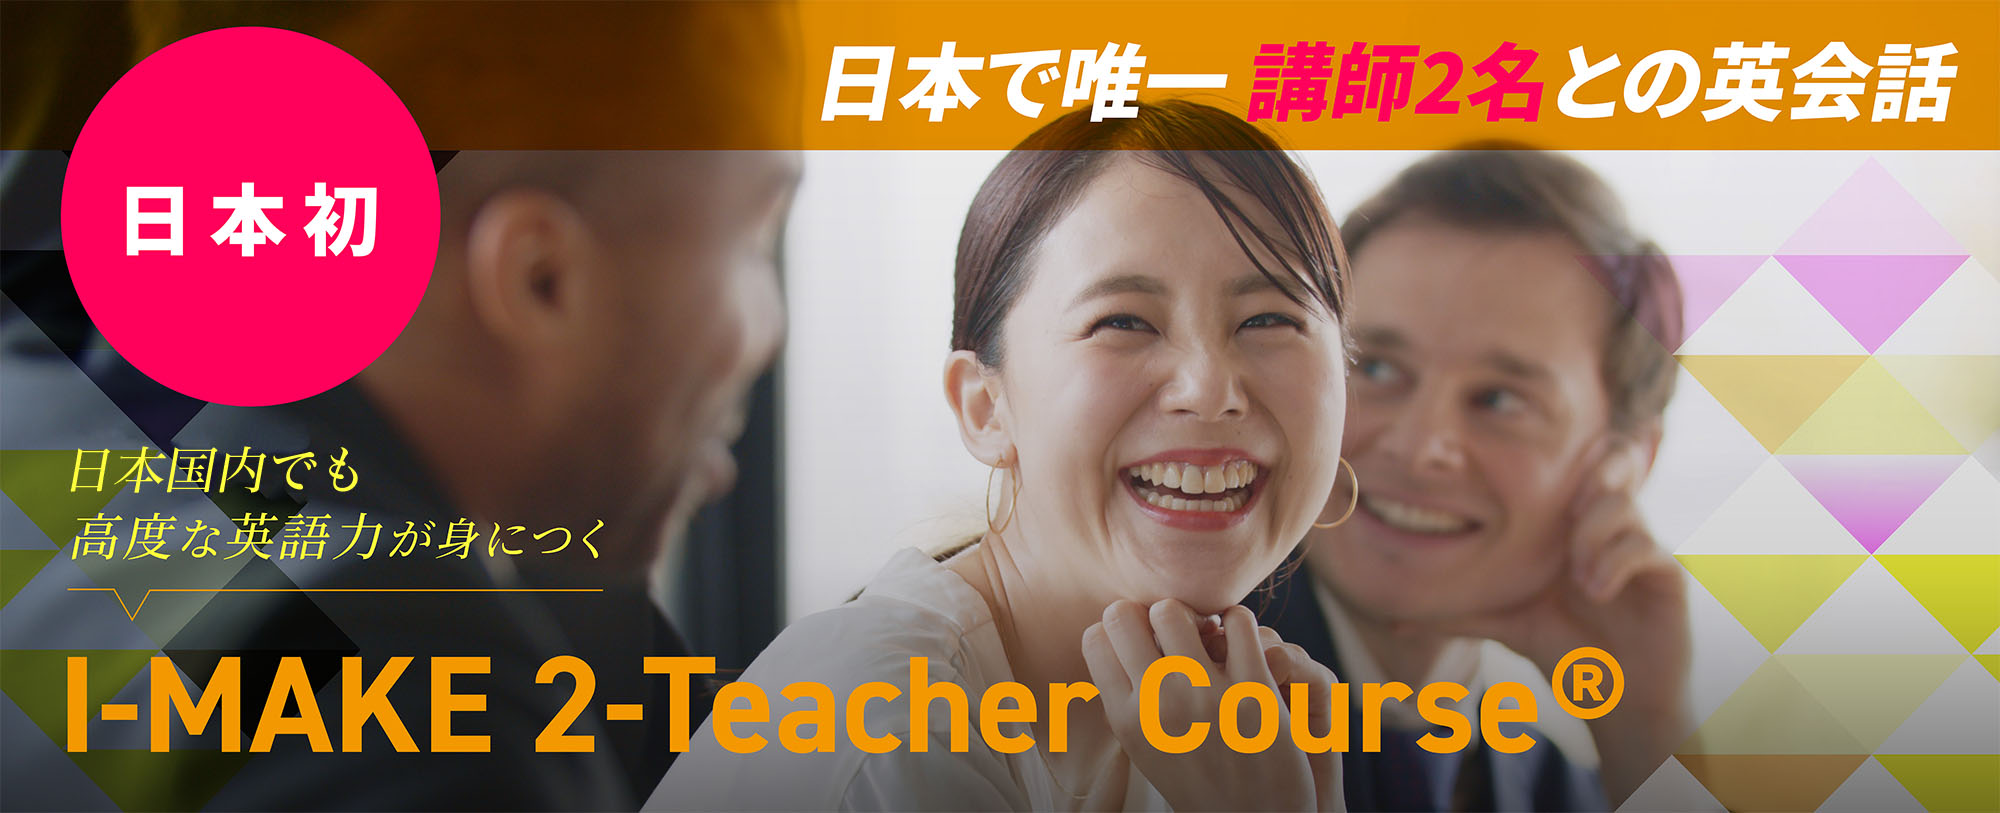 2-Teacher Course